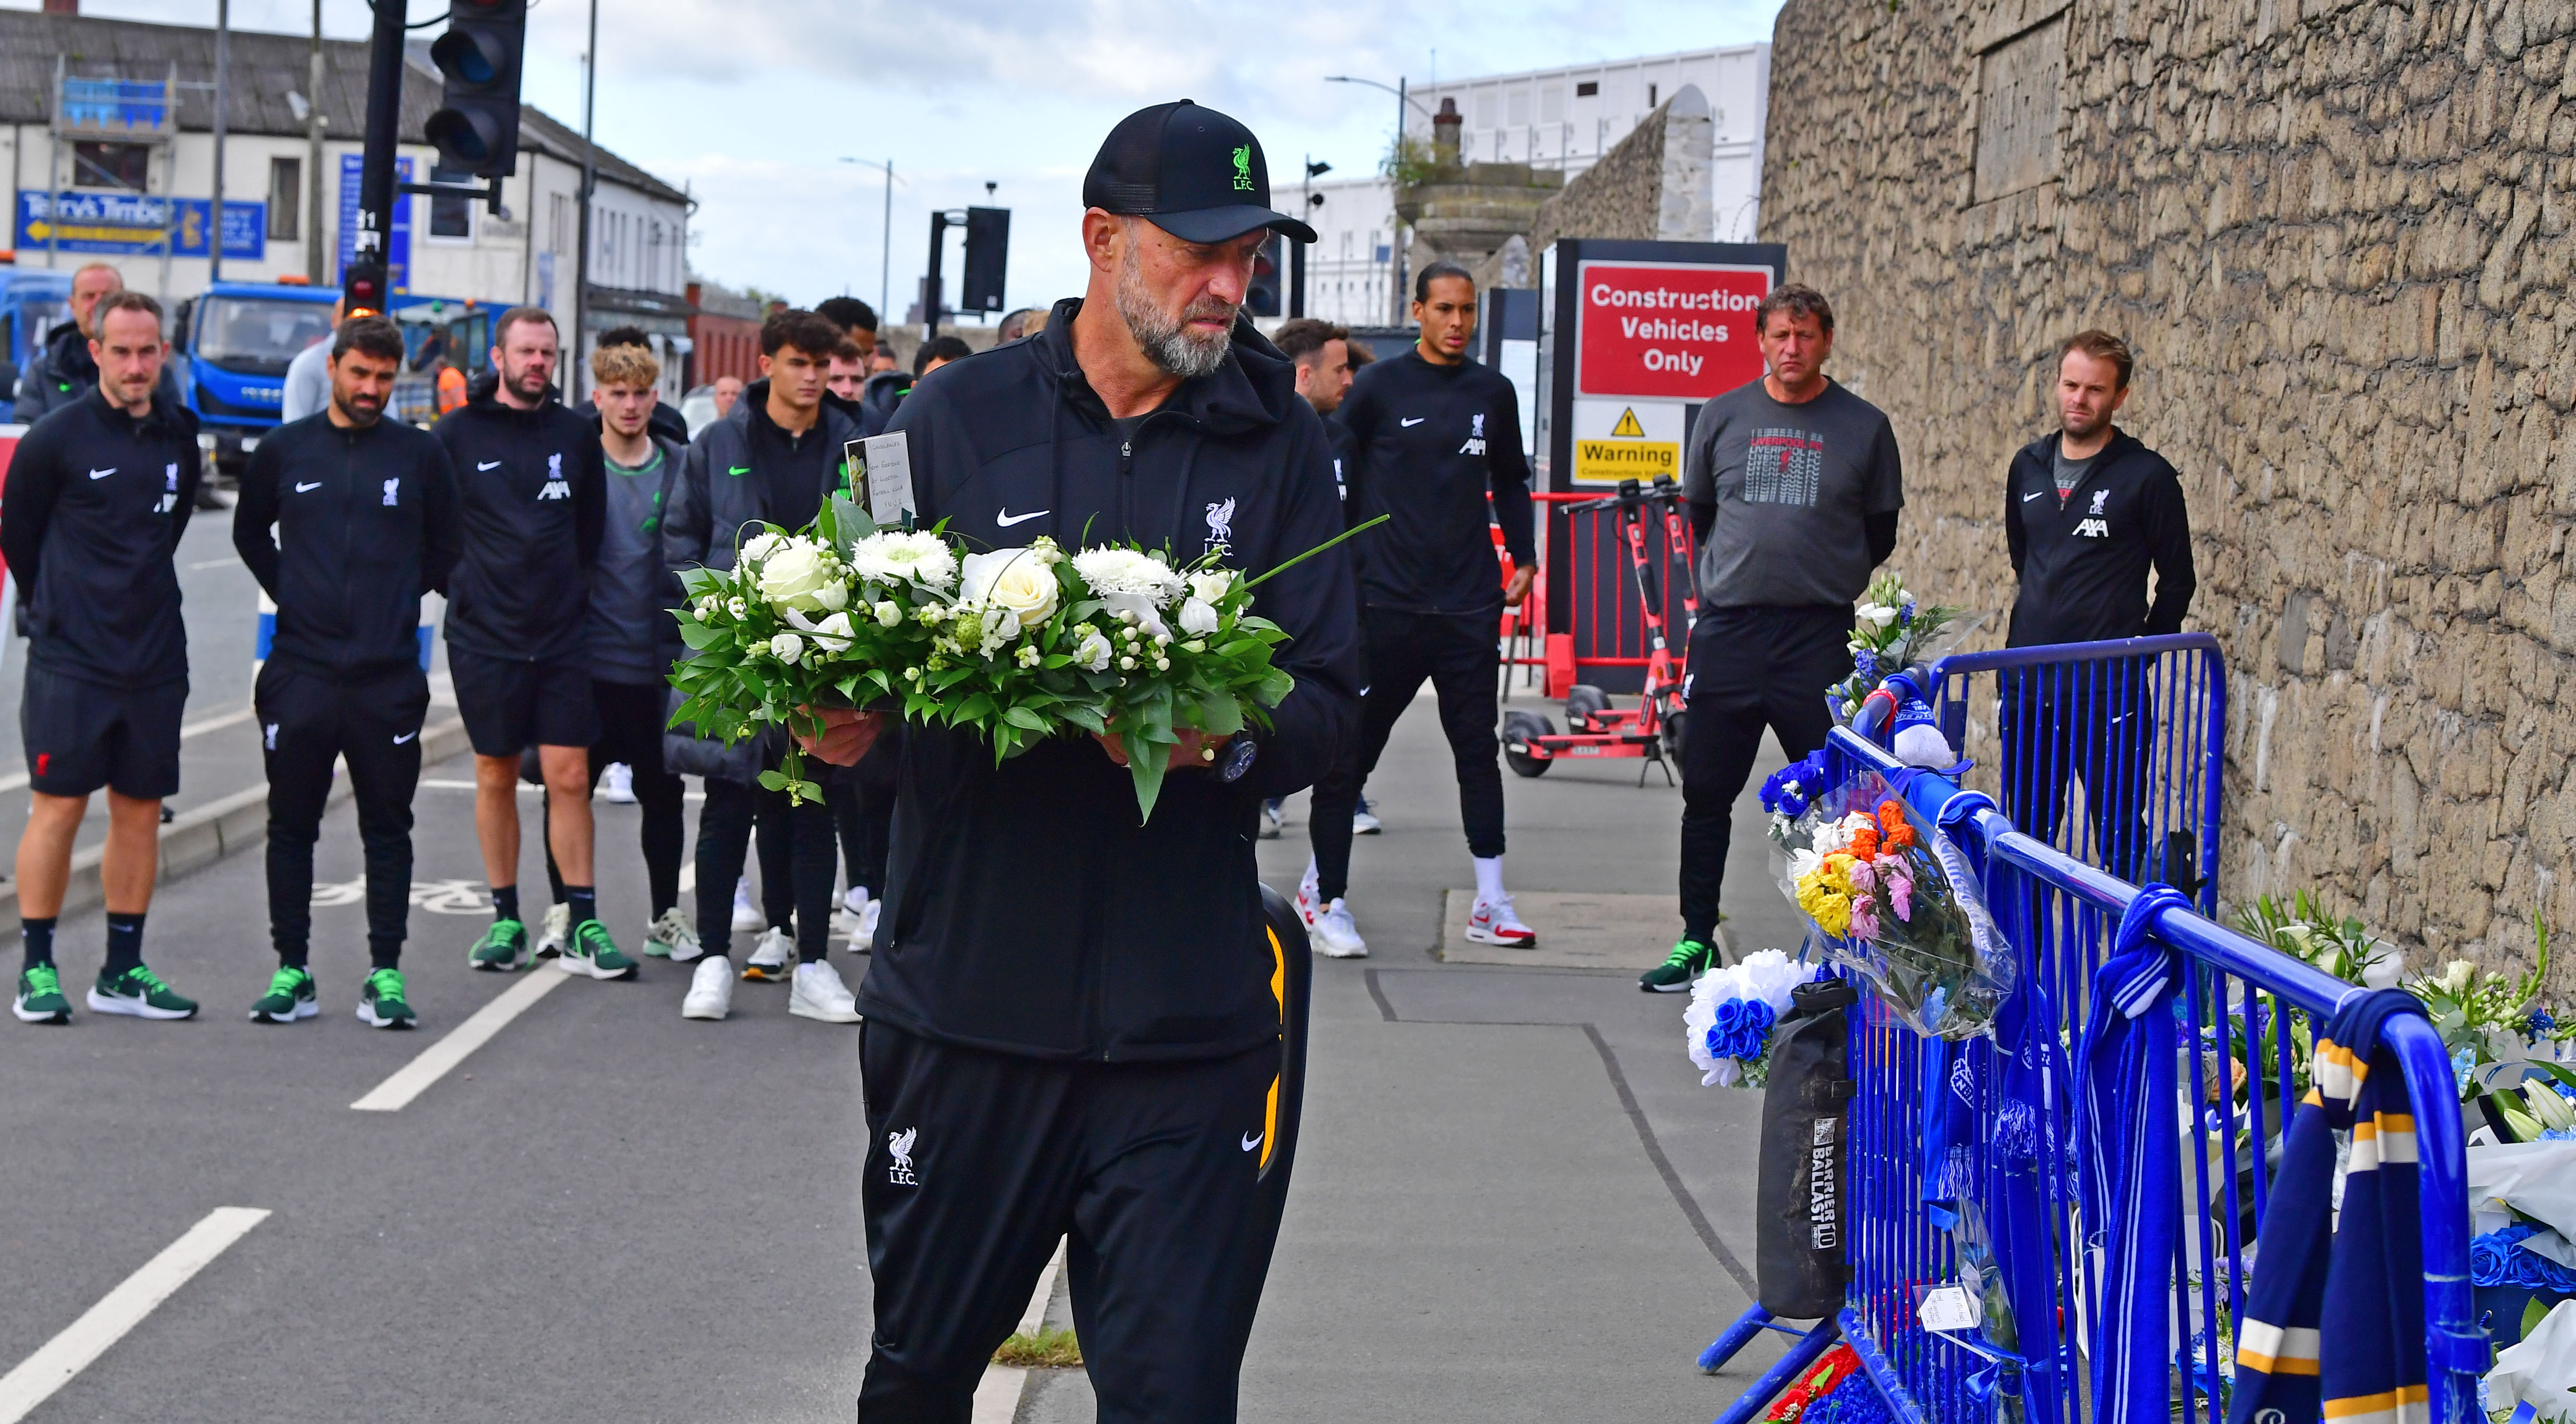 Jurgen Klopp and team lay flowers at Everton's new stadium after  construction worker's death | ITV News Granada